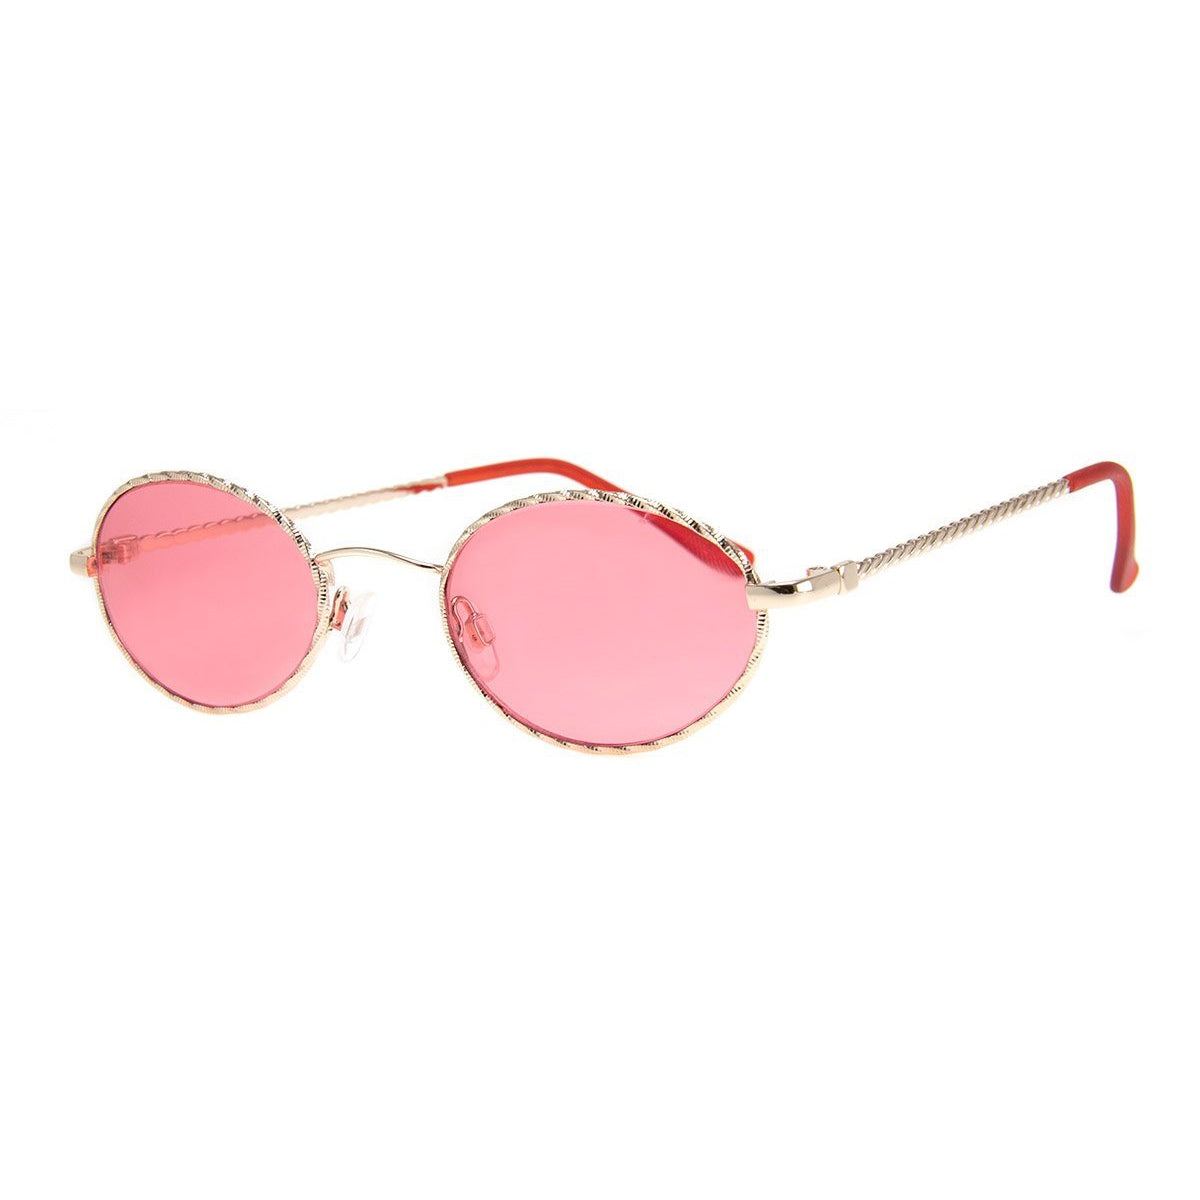 Priceless Sunglasses - Gold Pink